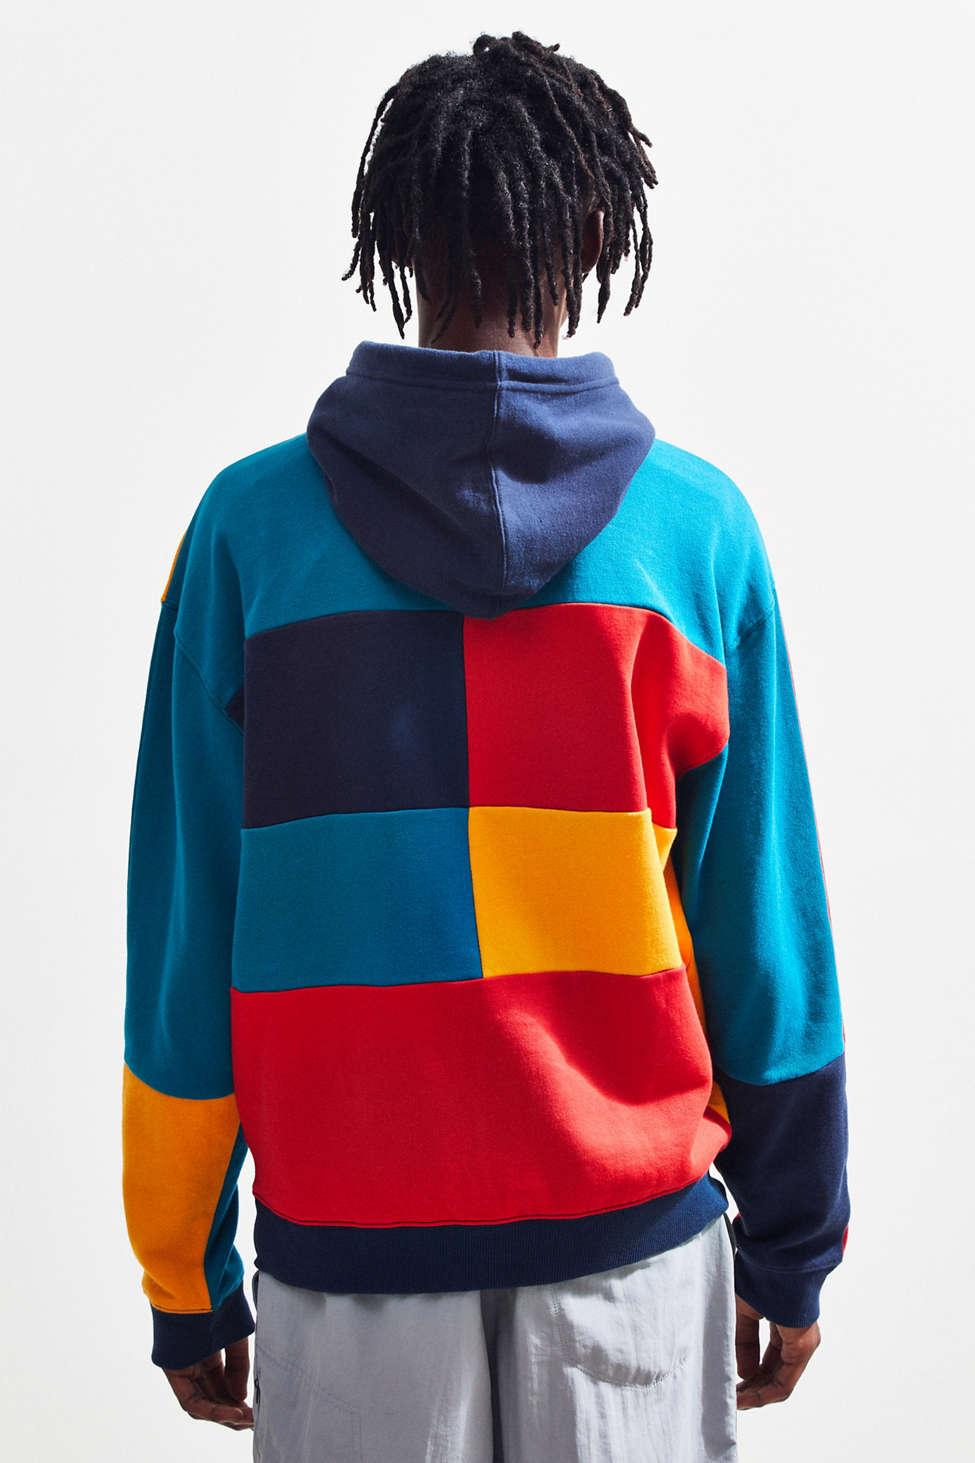 Lyst - Urban Outfitters Uo Colorblocked Hoodie Sweatshirt in Blue for Men